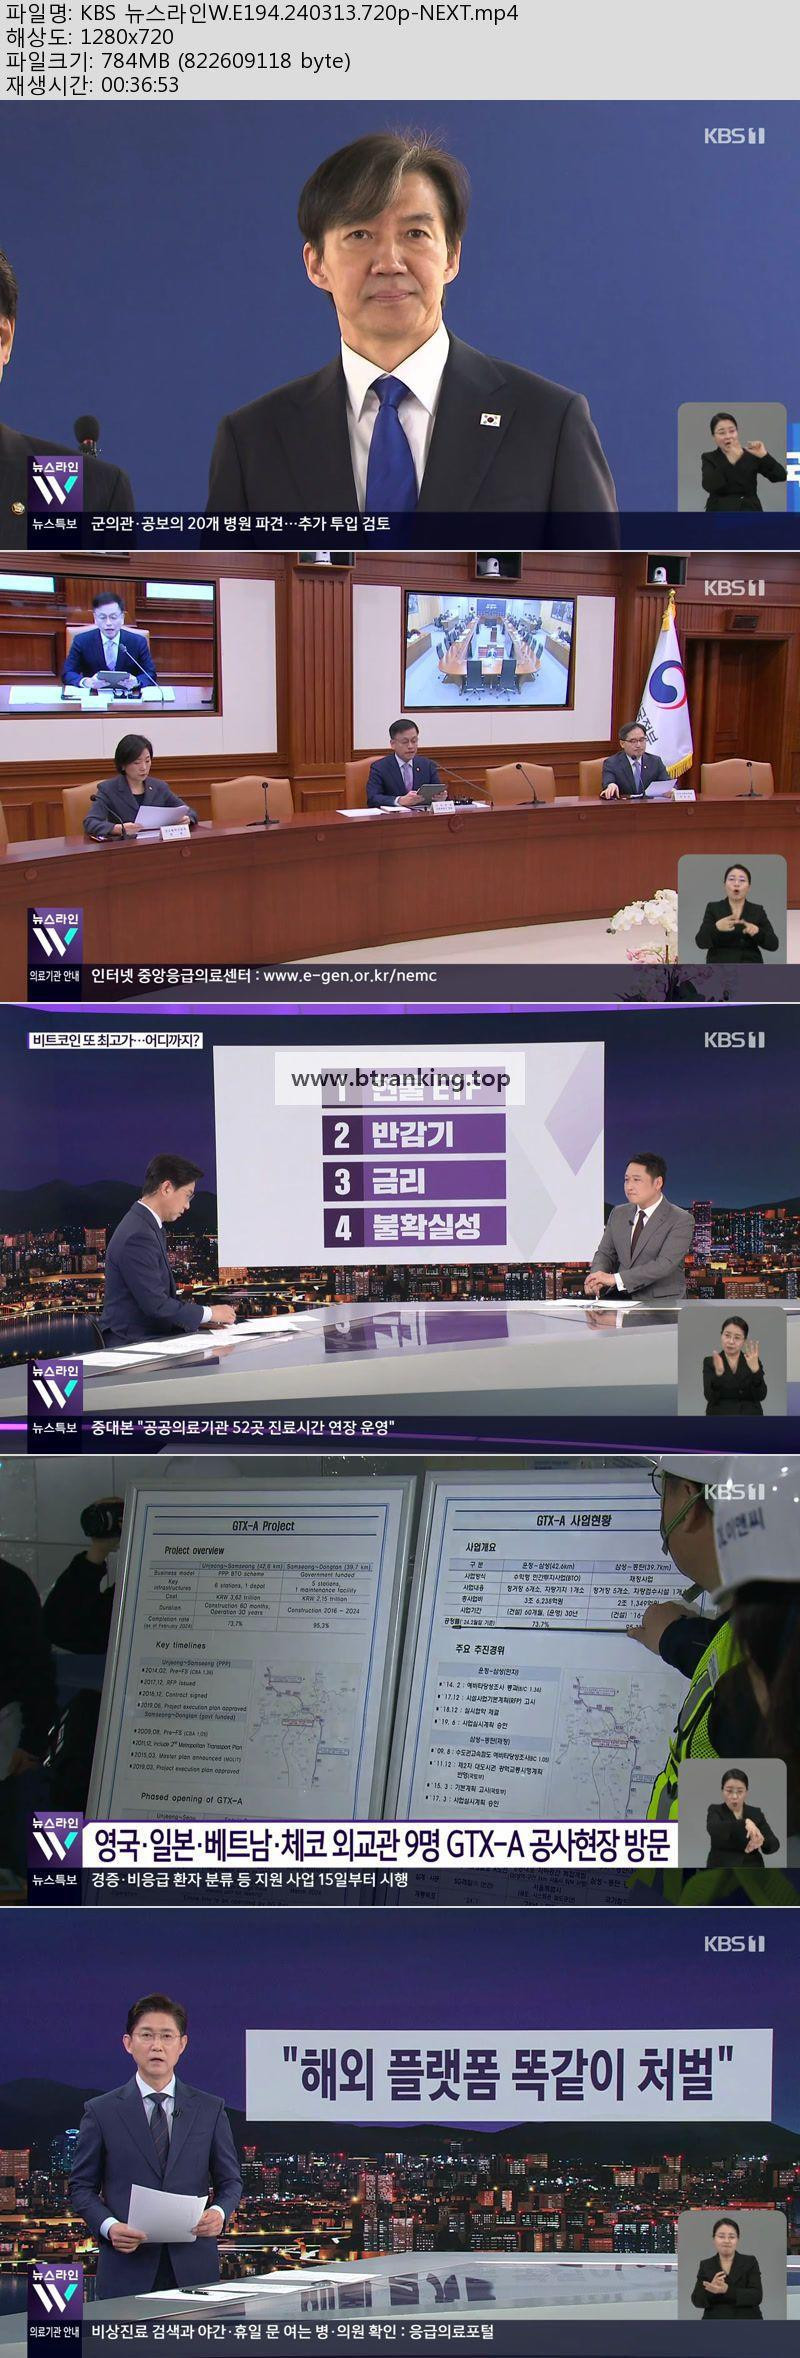 KBS 뉴스라인W.E194.240313.720p-NEXT